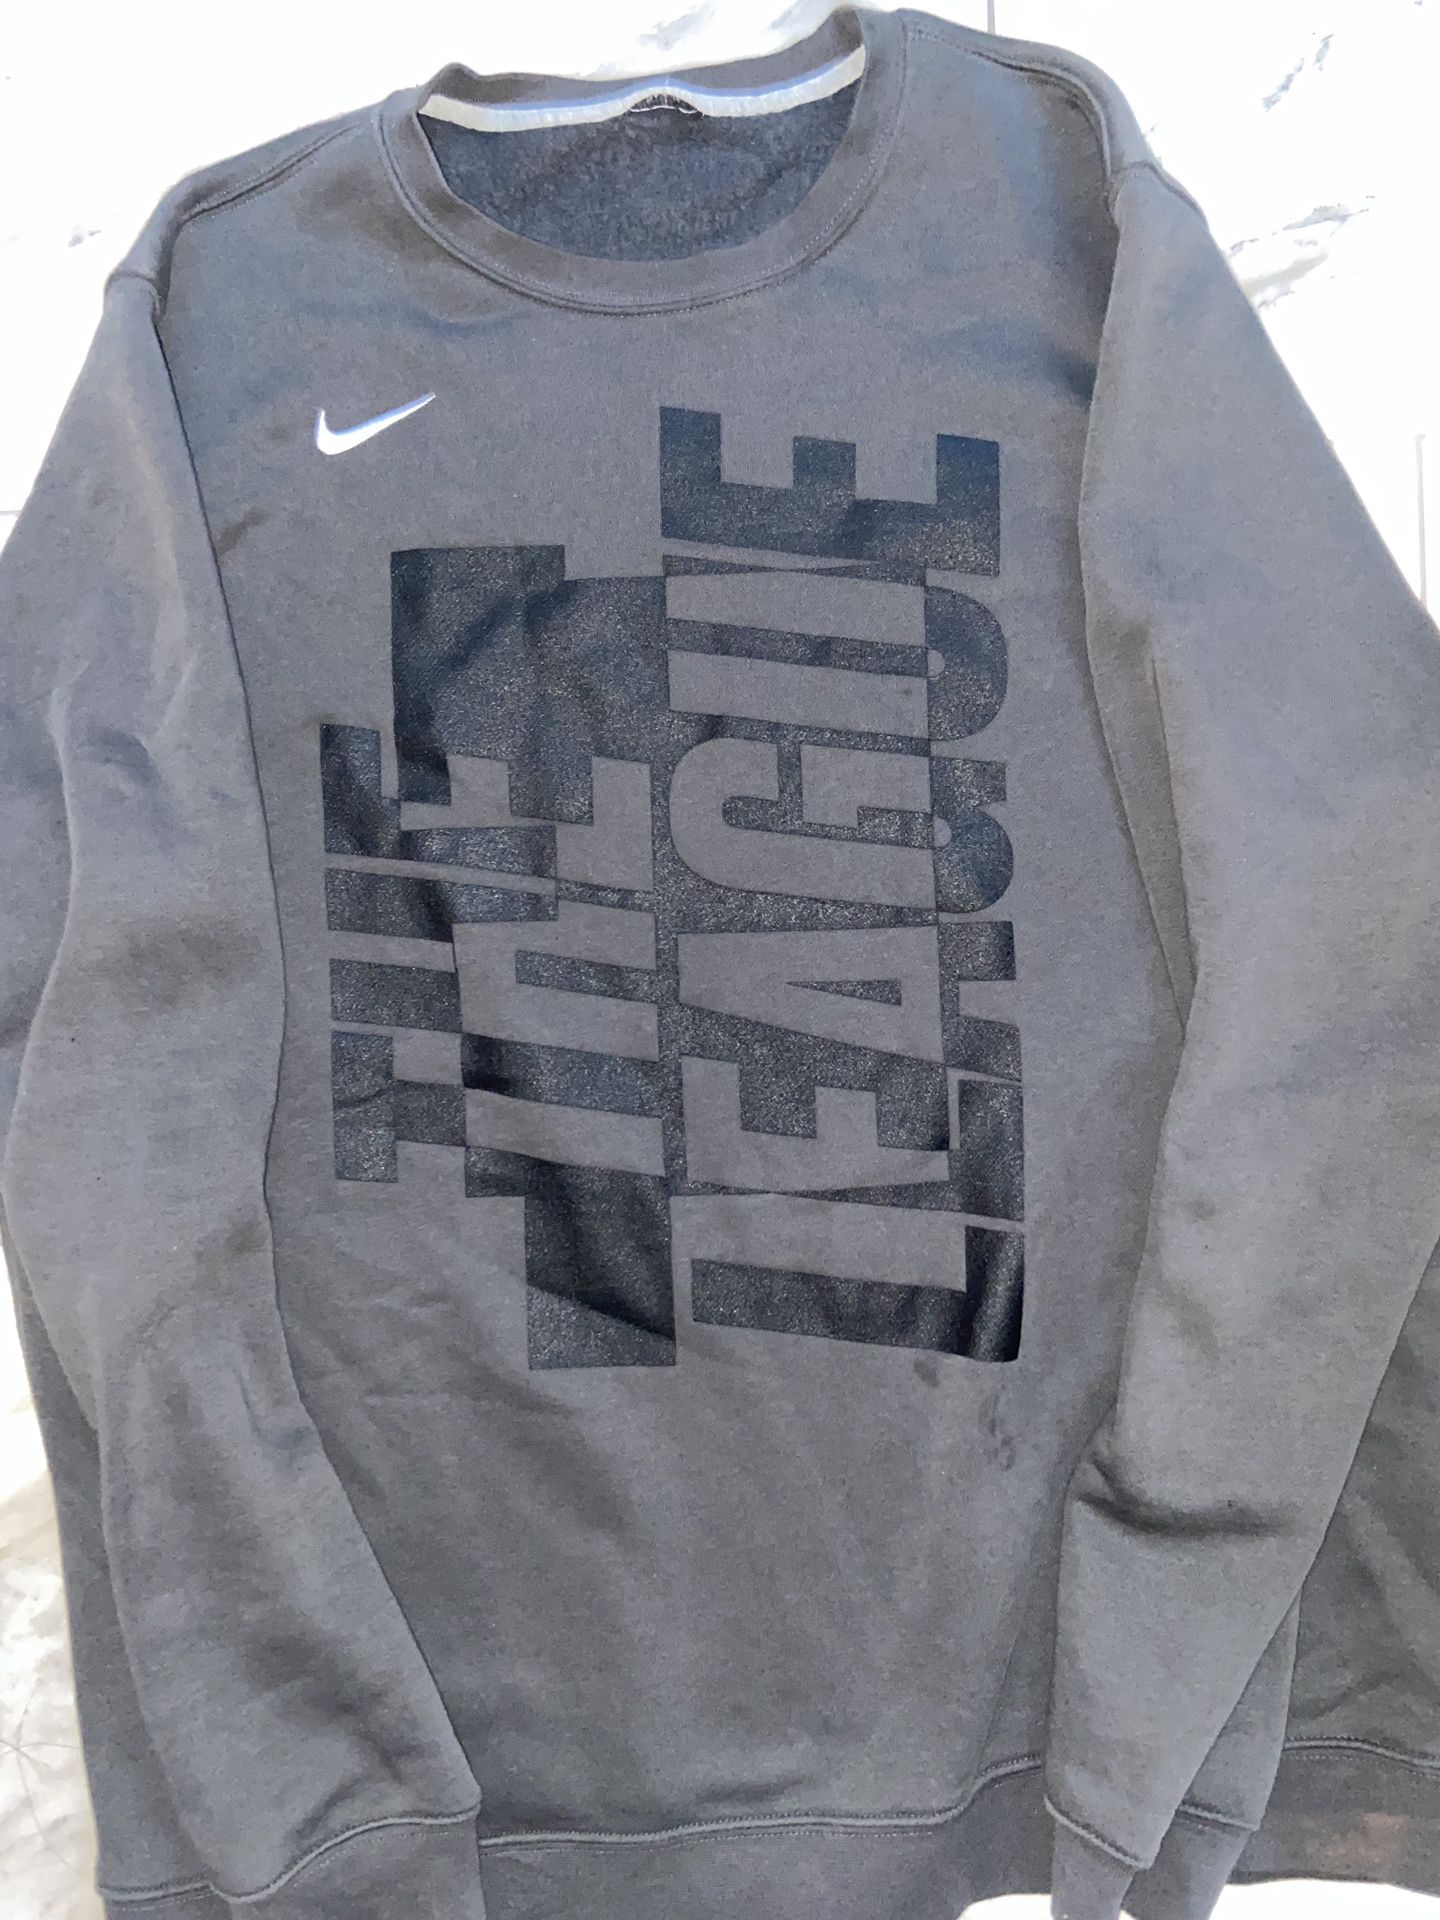 Men’s Nike sweatshirt